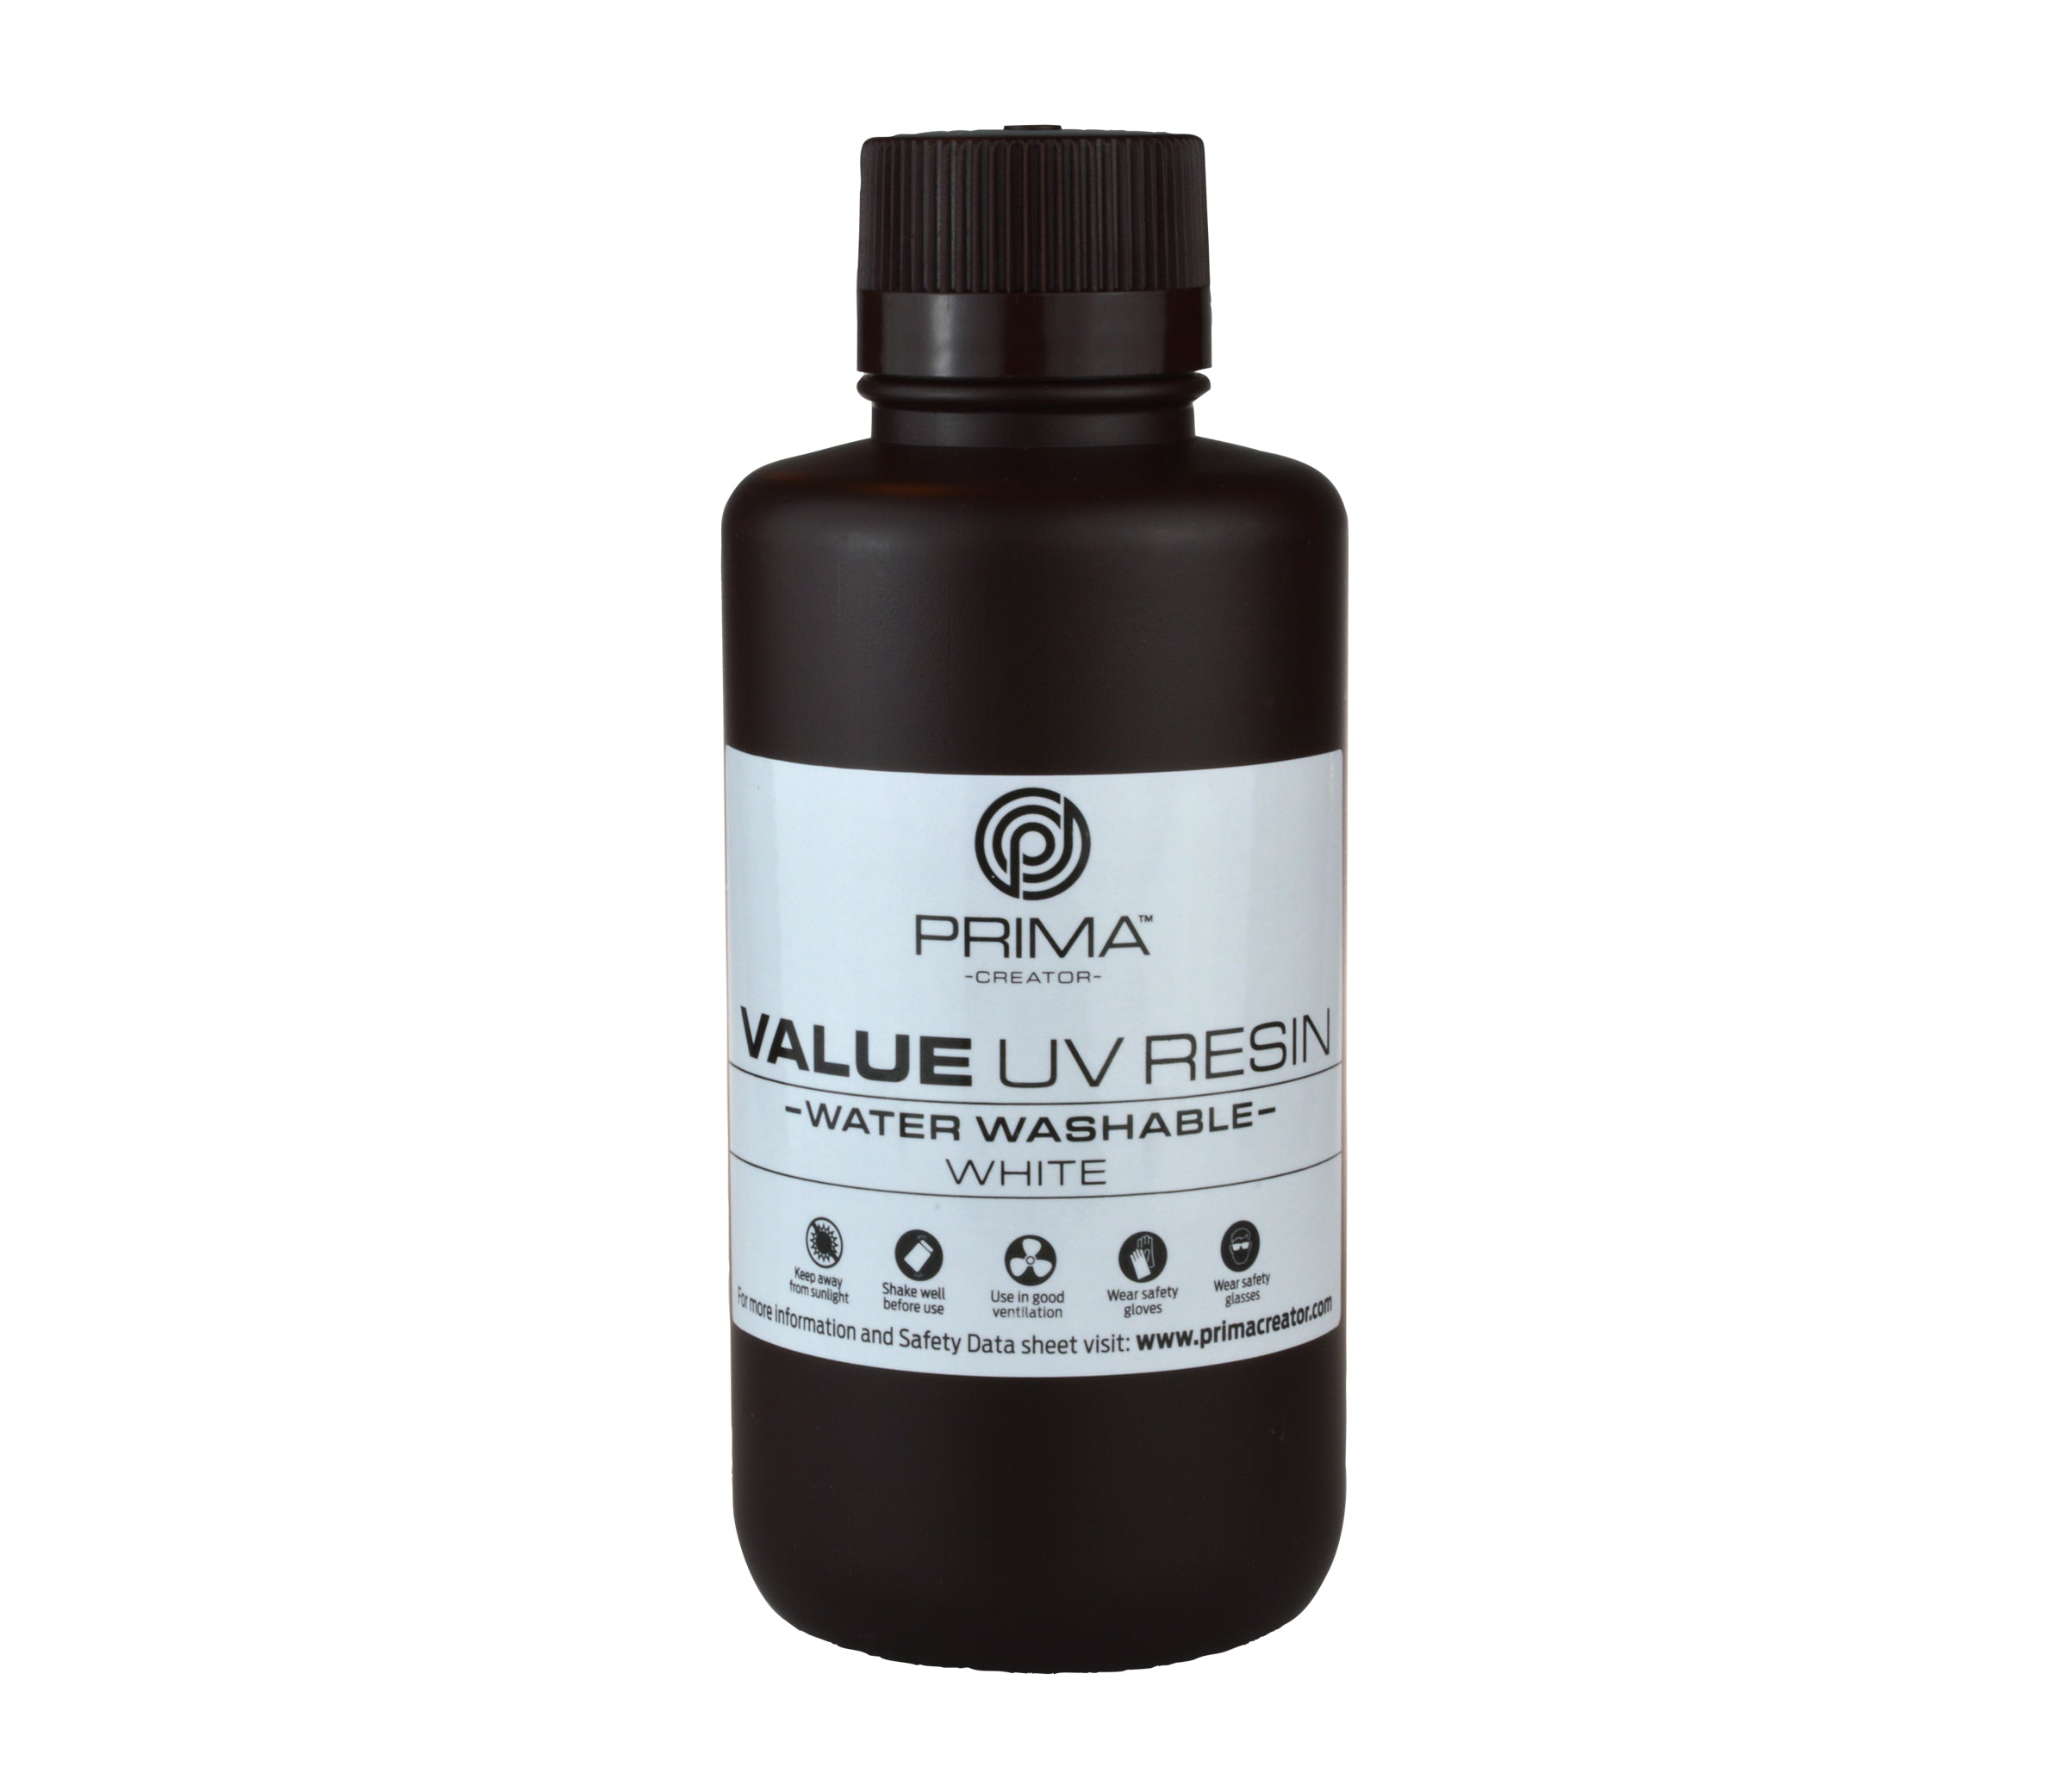 PrimaCreator Resin Value Water Washable UV